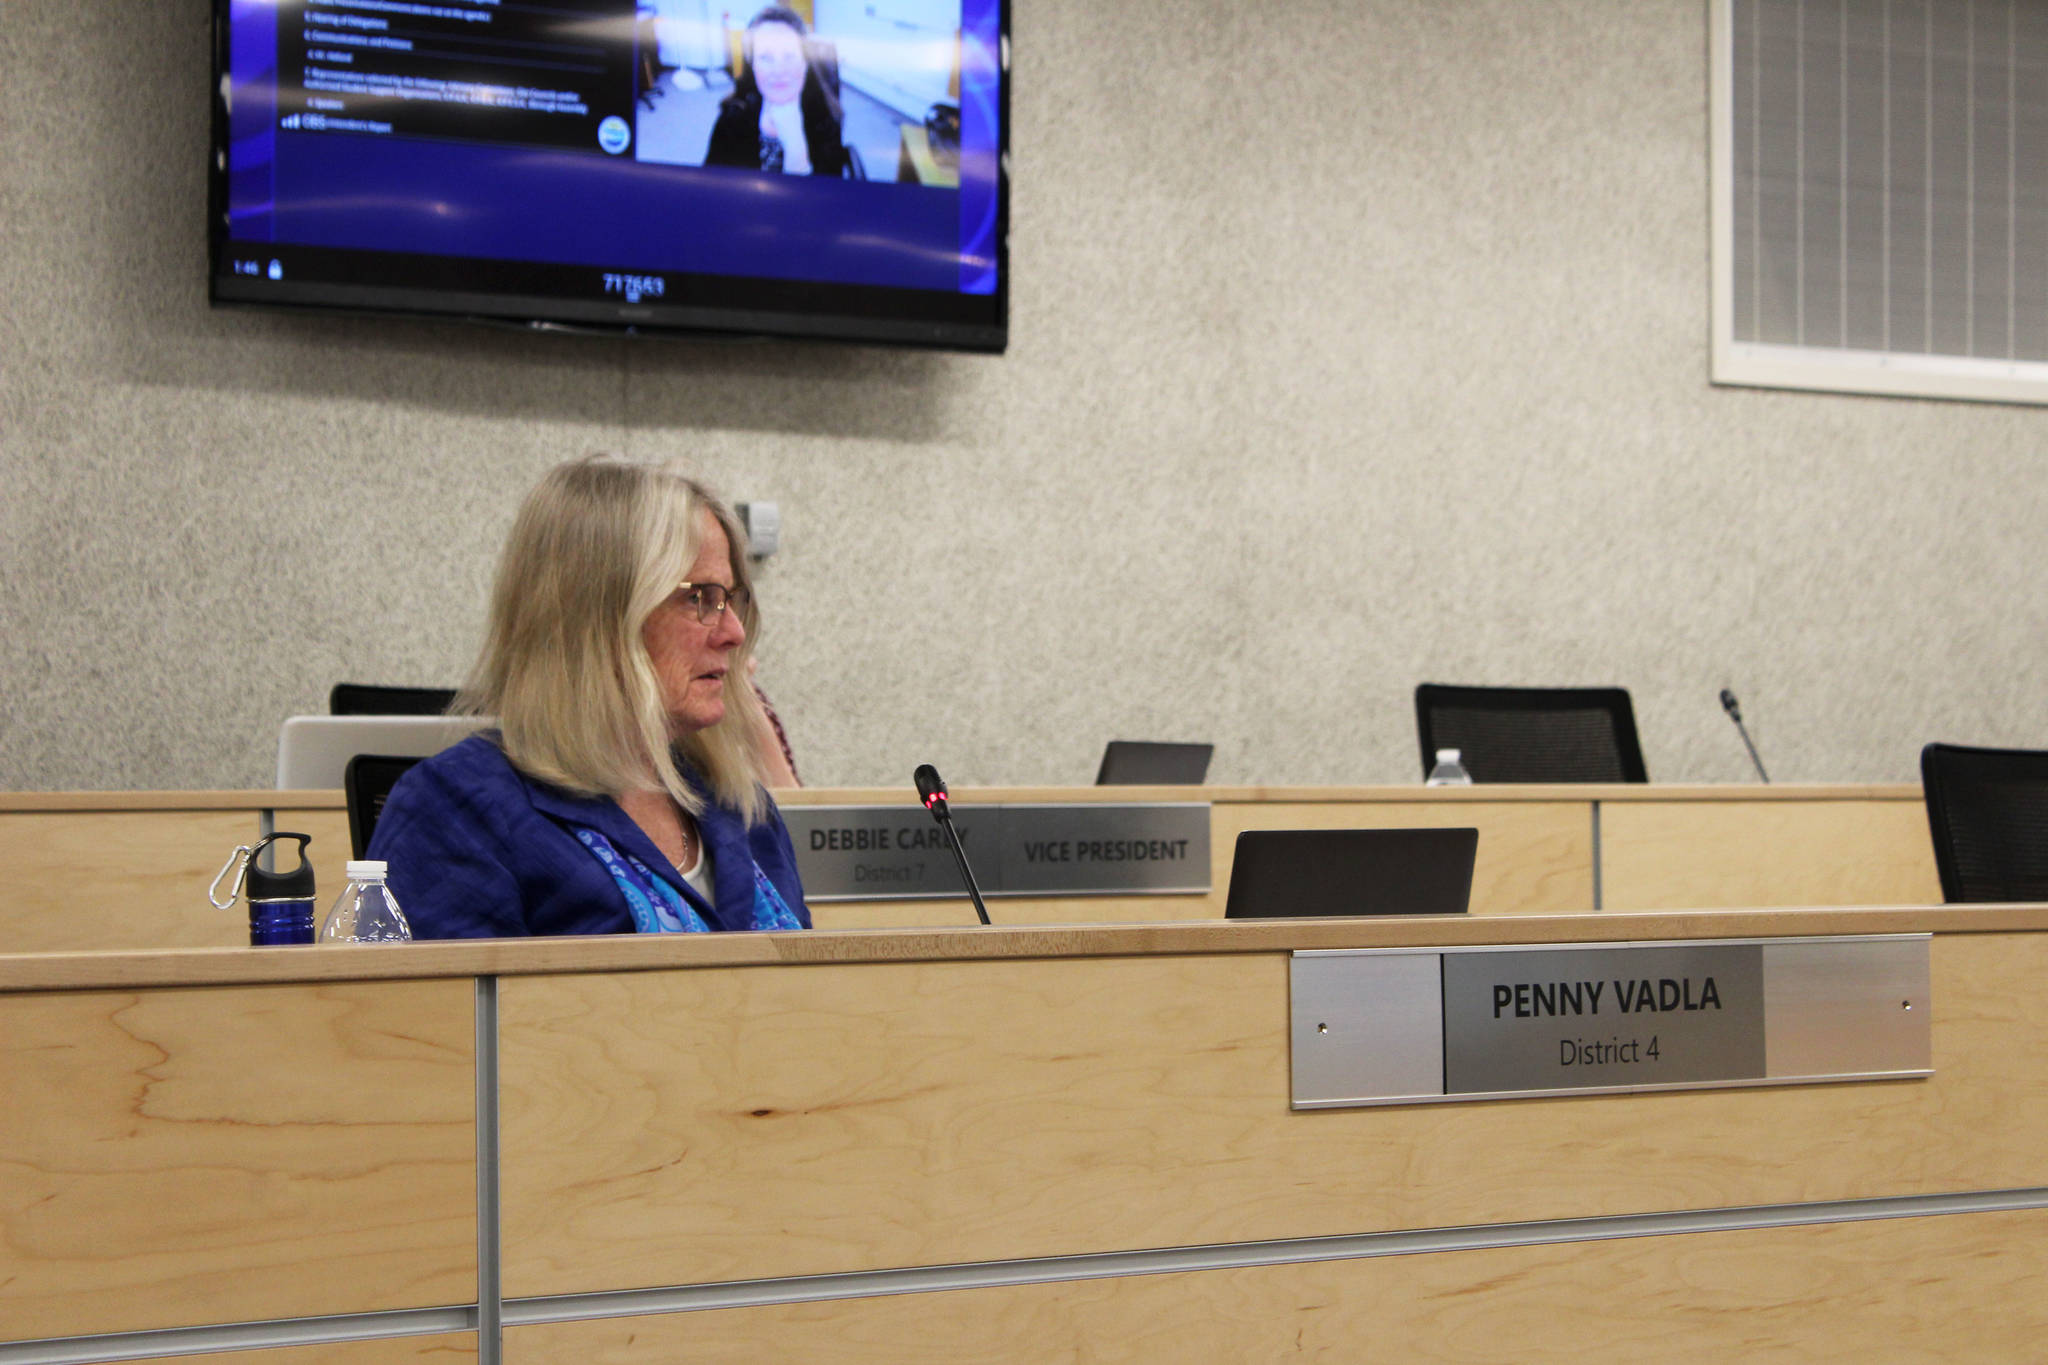 Penny Vadla speaks at a meeting of the Kenai Peninsula Borough School District Board of Education on Monday, July 12, 2021 in Soldotna, Alaska. (Ashlyn O’Hara/Peninsula Clarion)